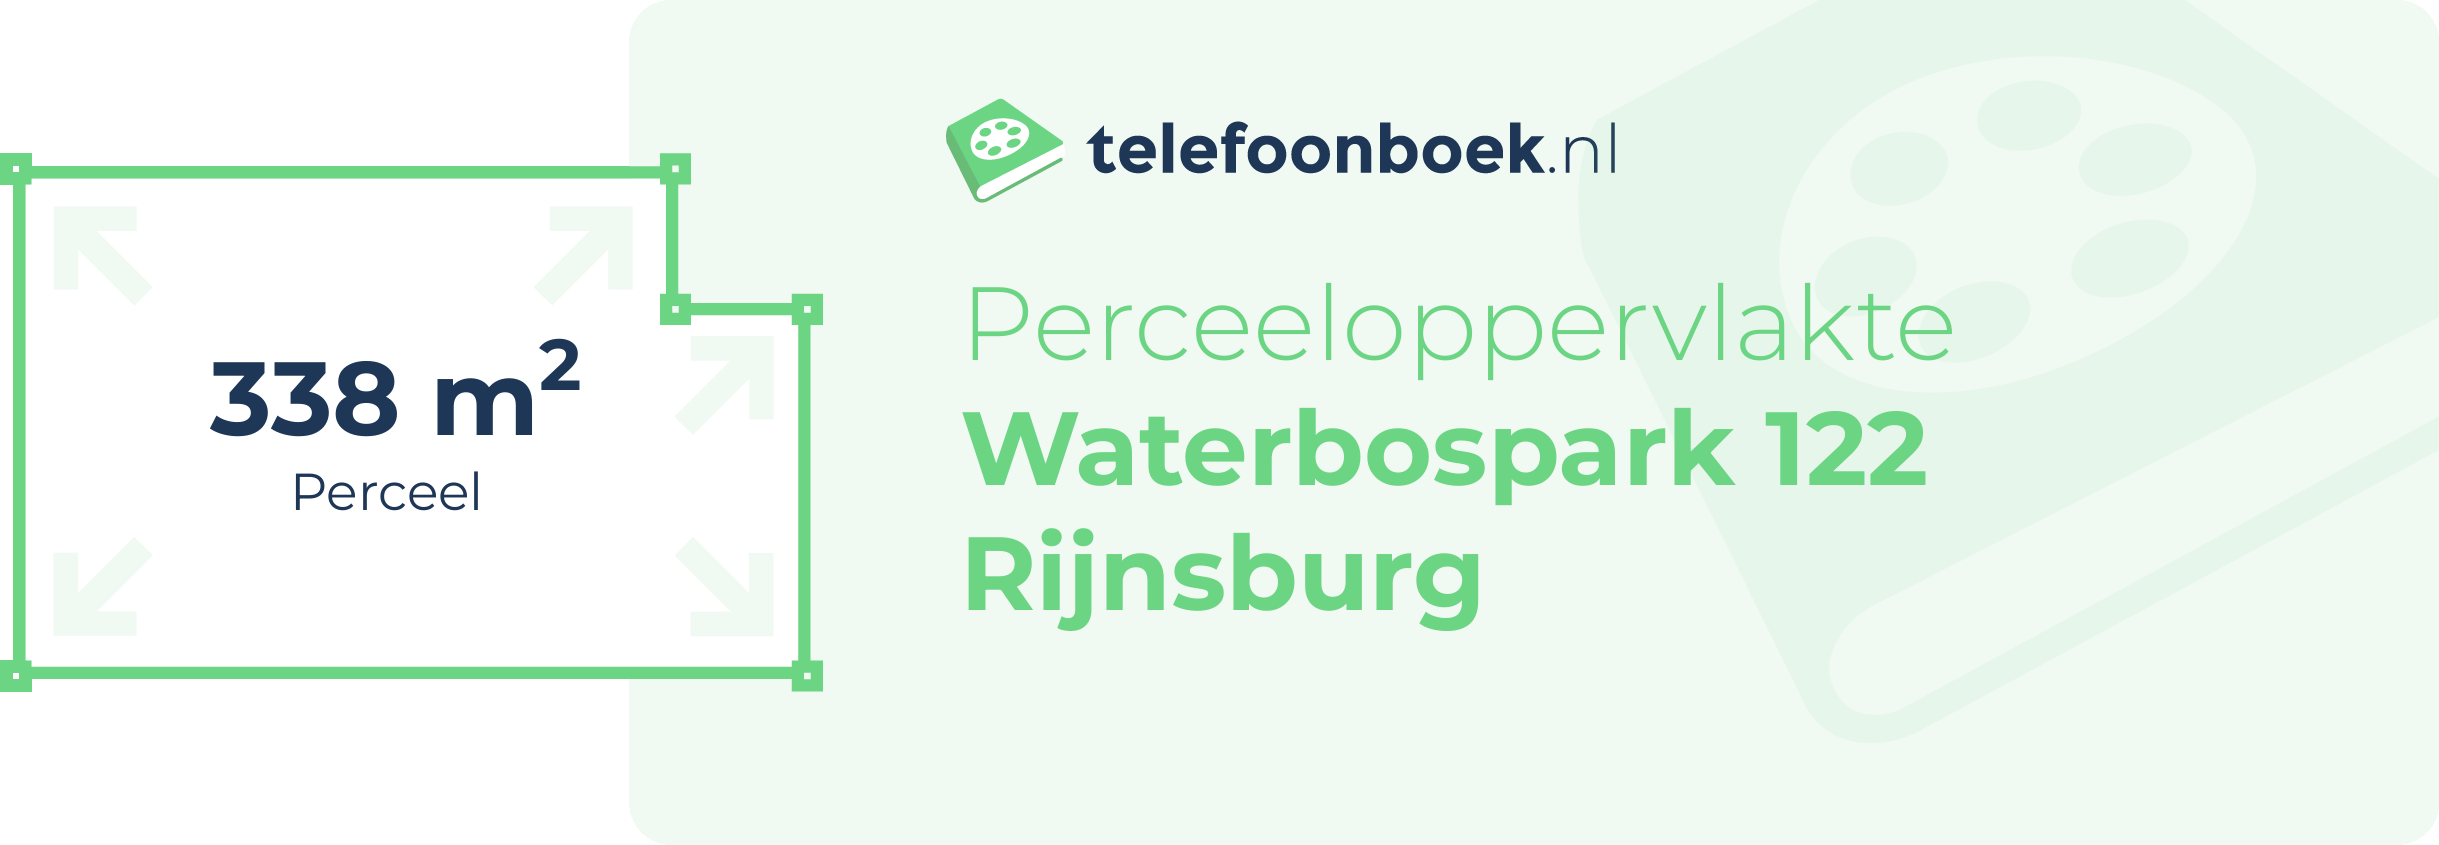 Perceeloppervlakte Waterbospark 122 Rijnsburg